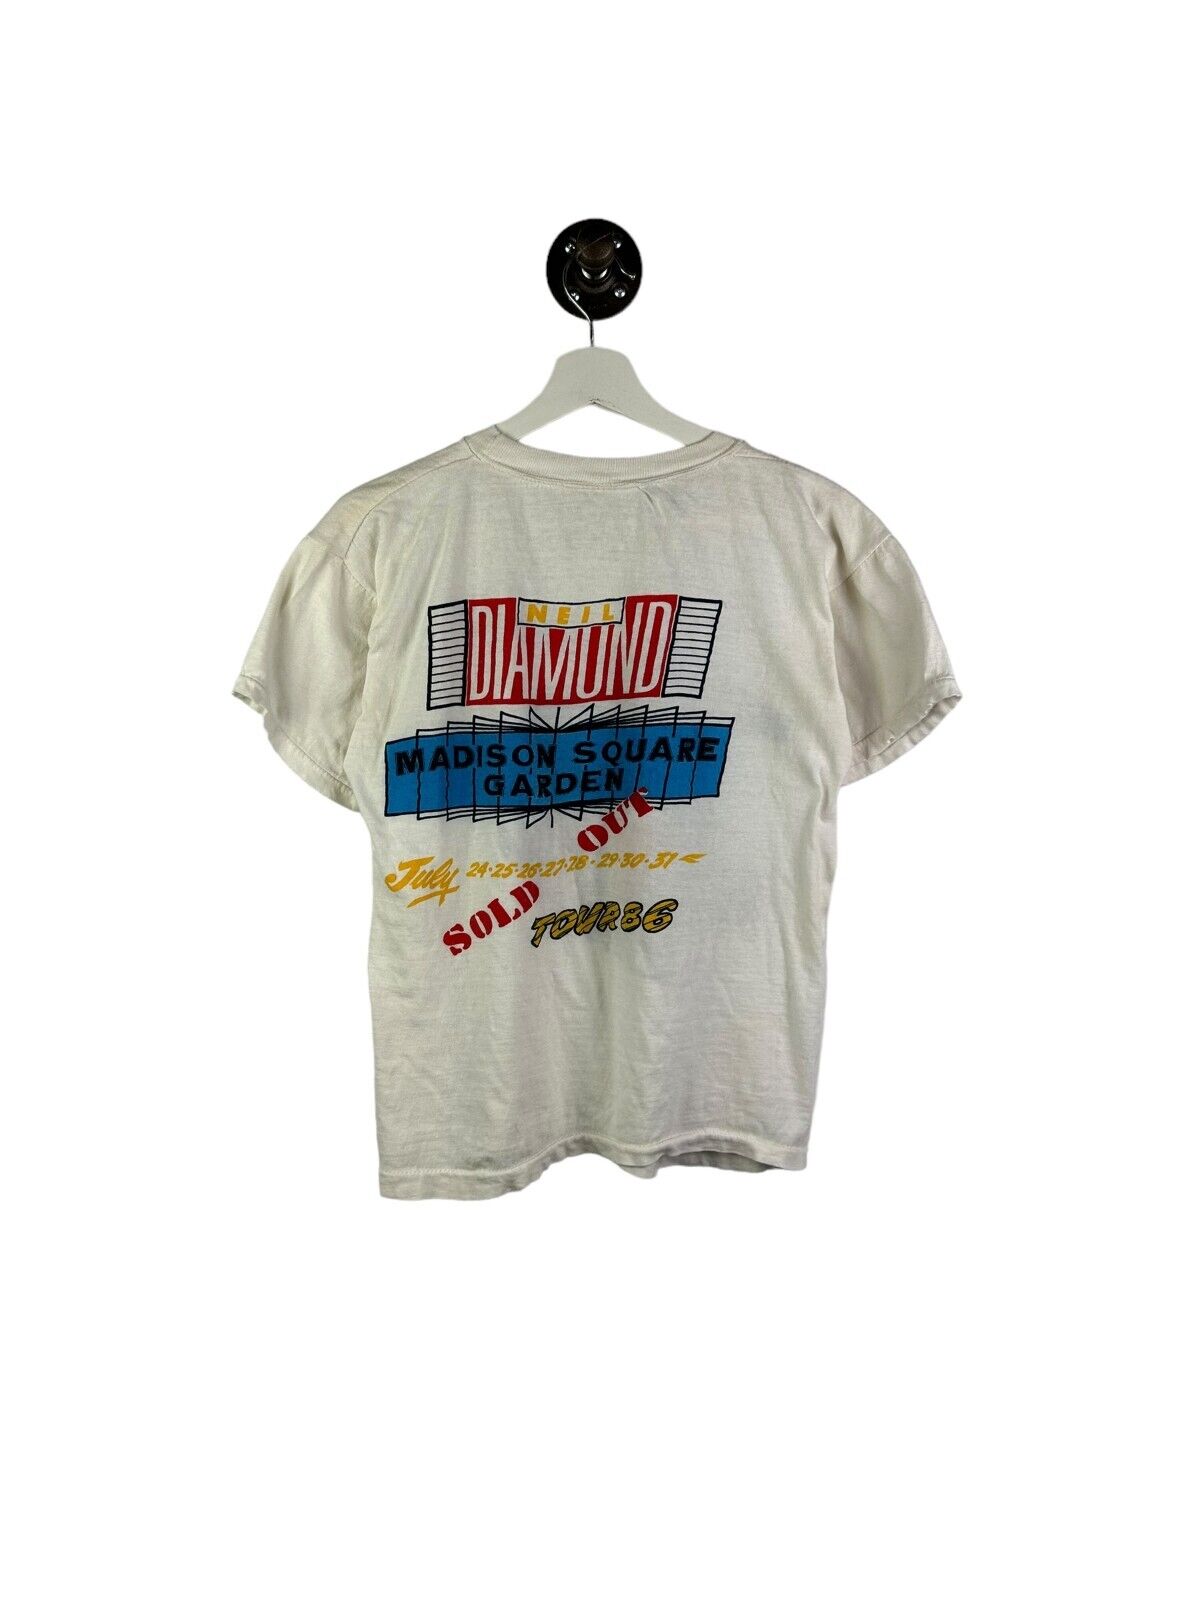 Vintage 1986 Neil Diamond Headed For The Future Rock Graphic T-Shirt Size Medium